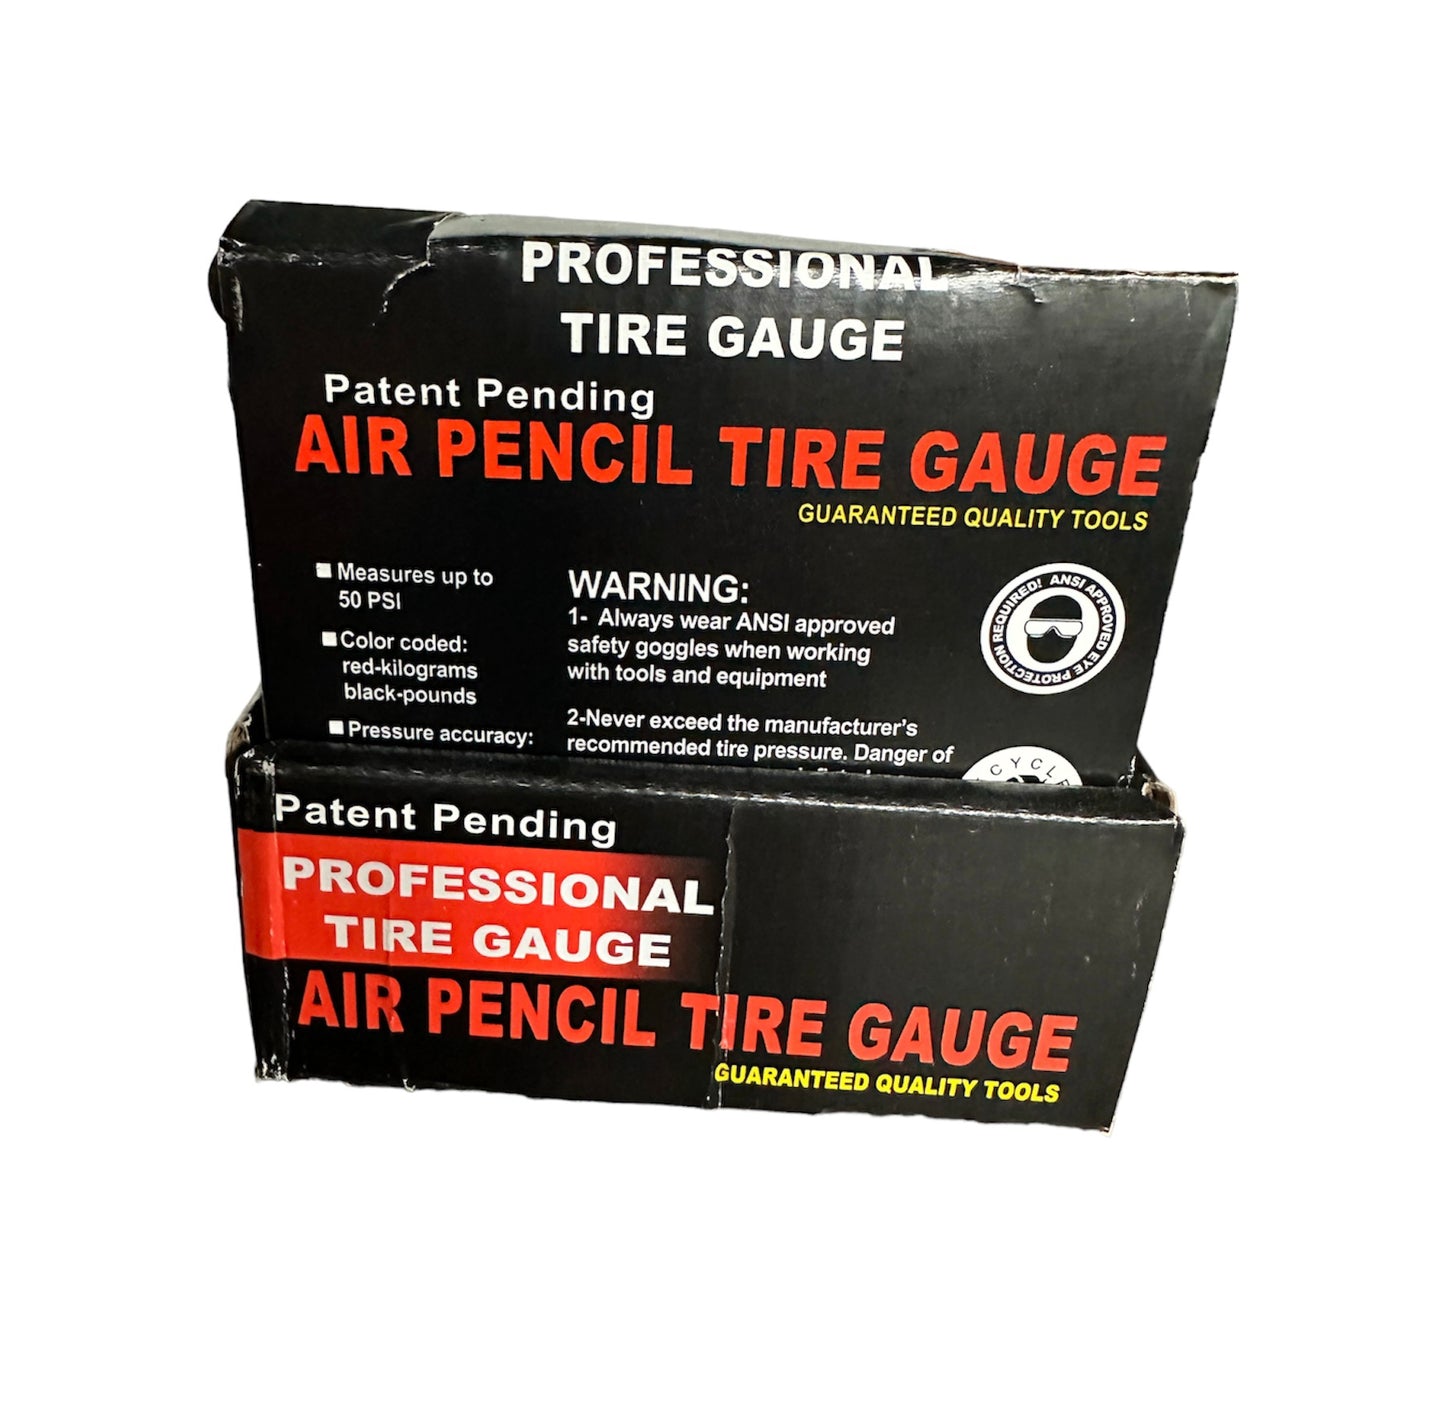 Air Pencil Tire Gauge 48 ct